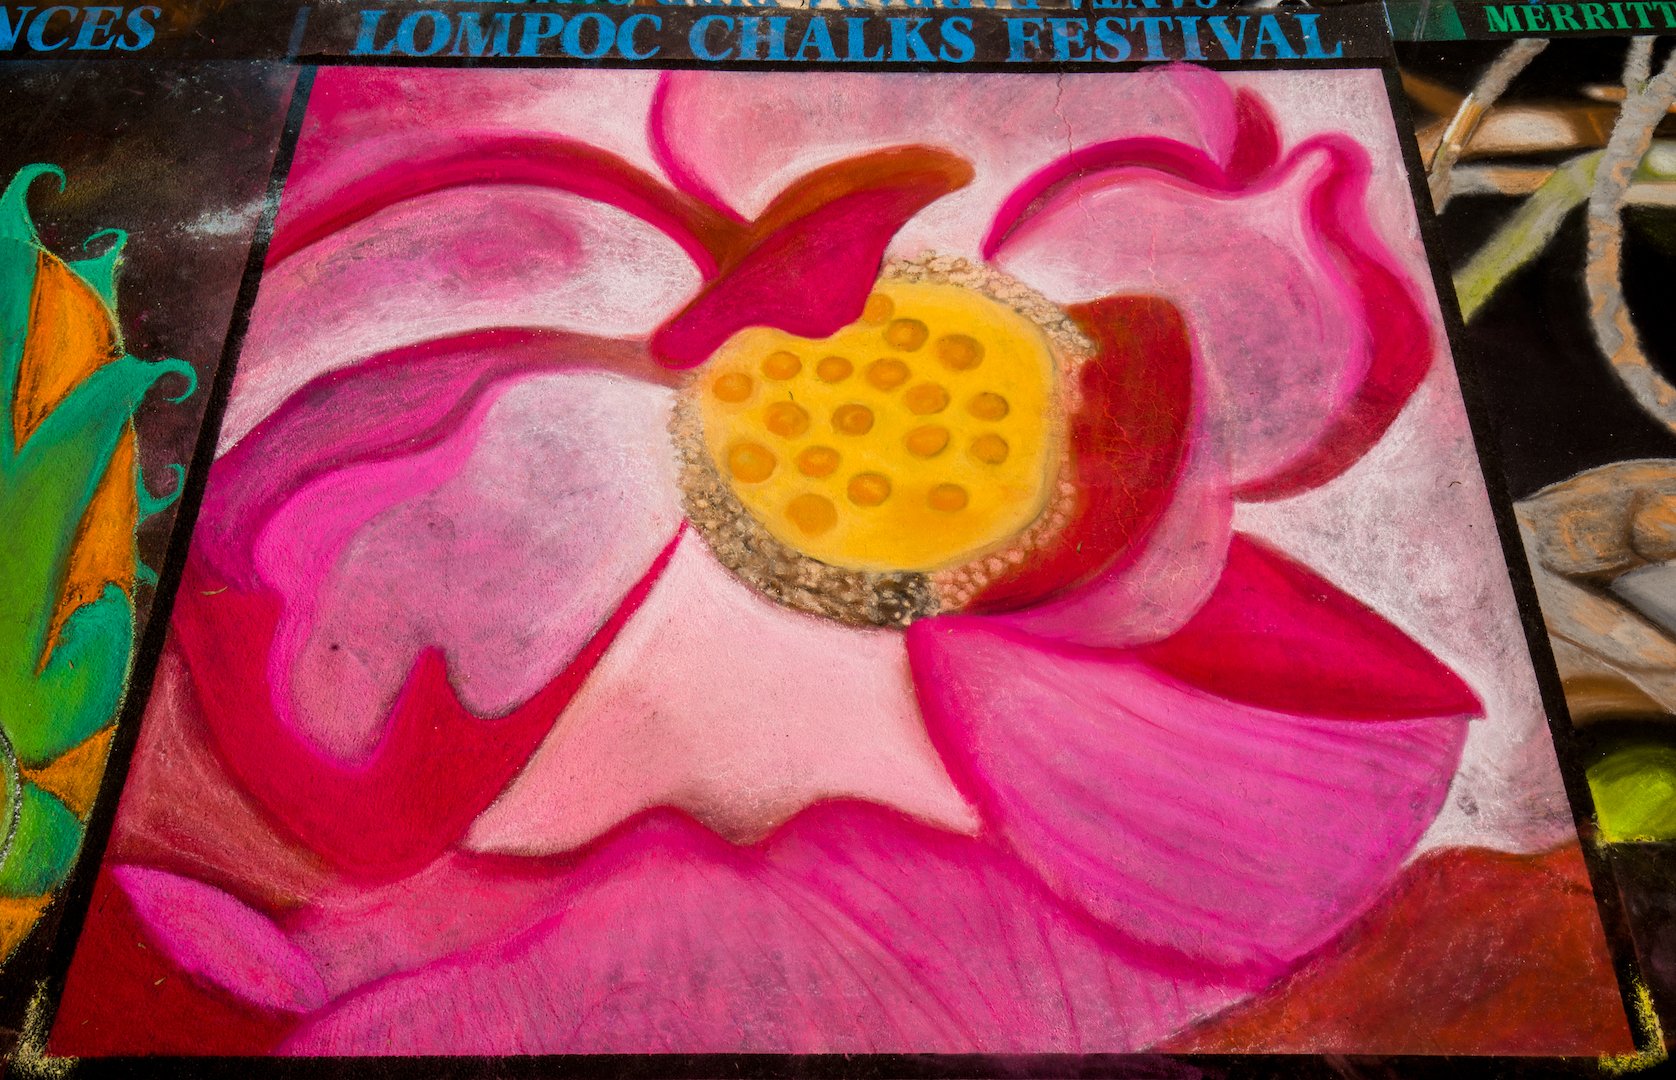  Lompoc Chalks Festival  Artists:  Sherrie Chavez and Moleby Lara 